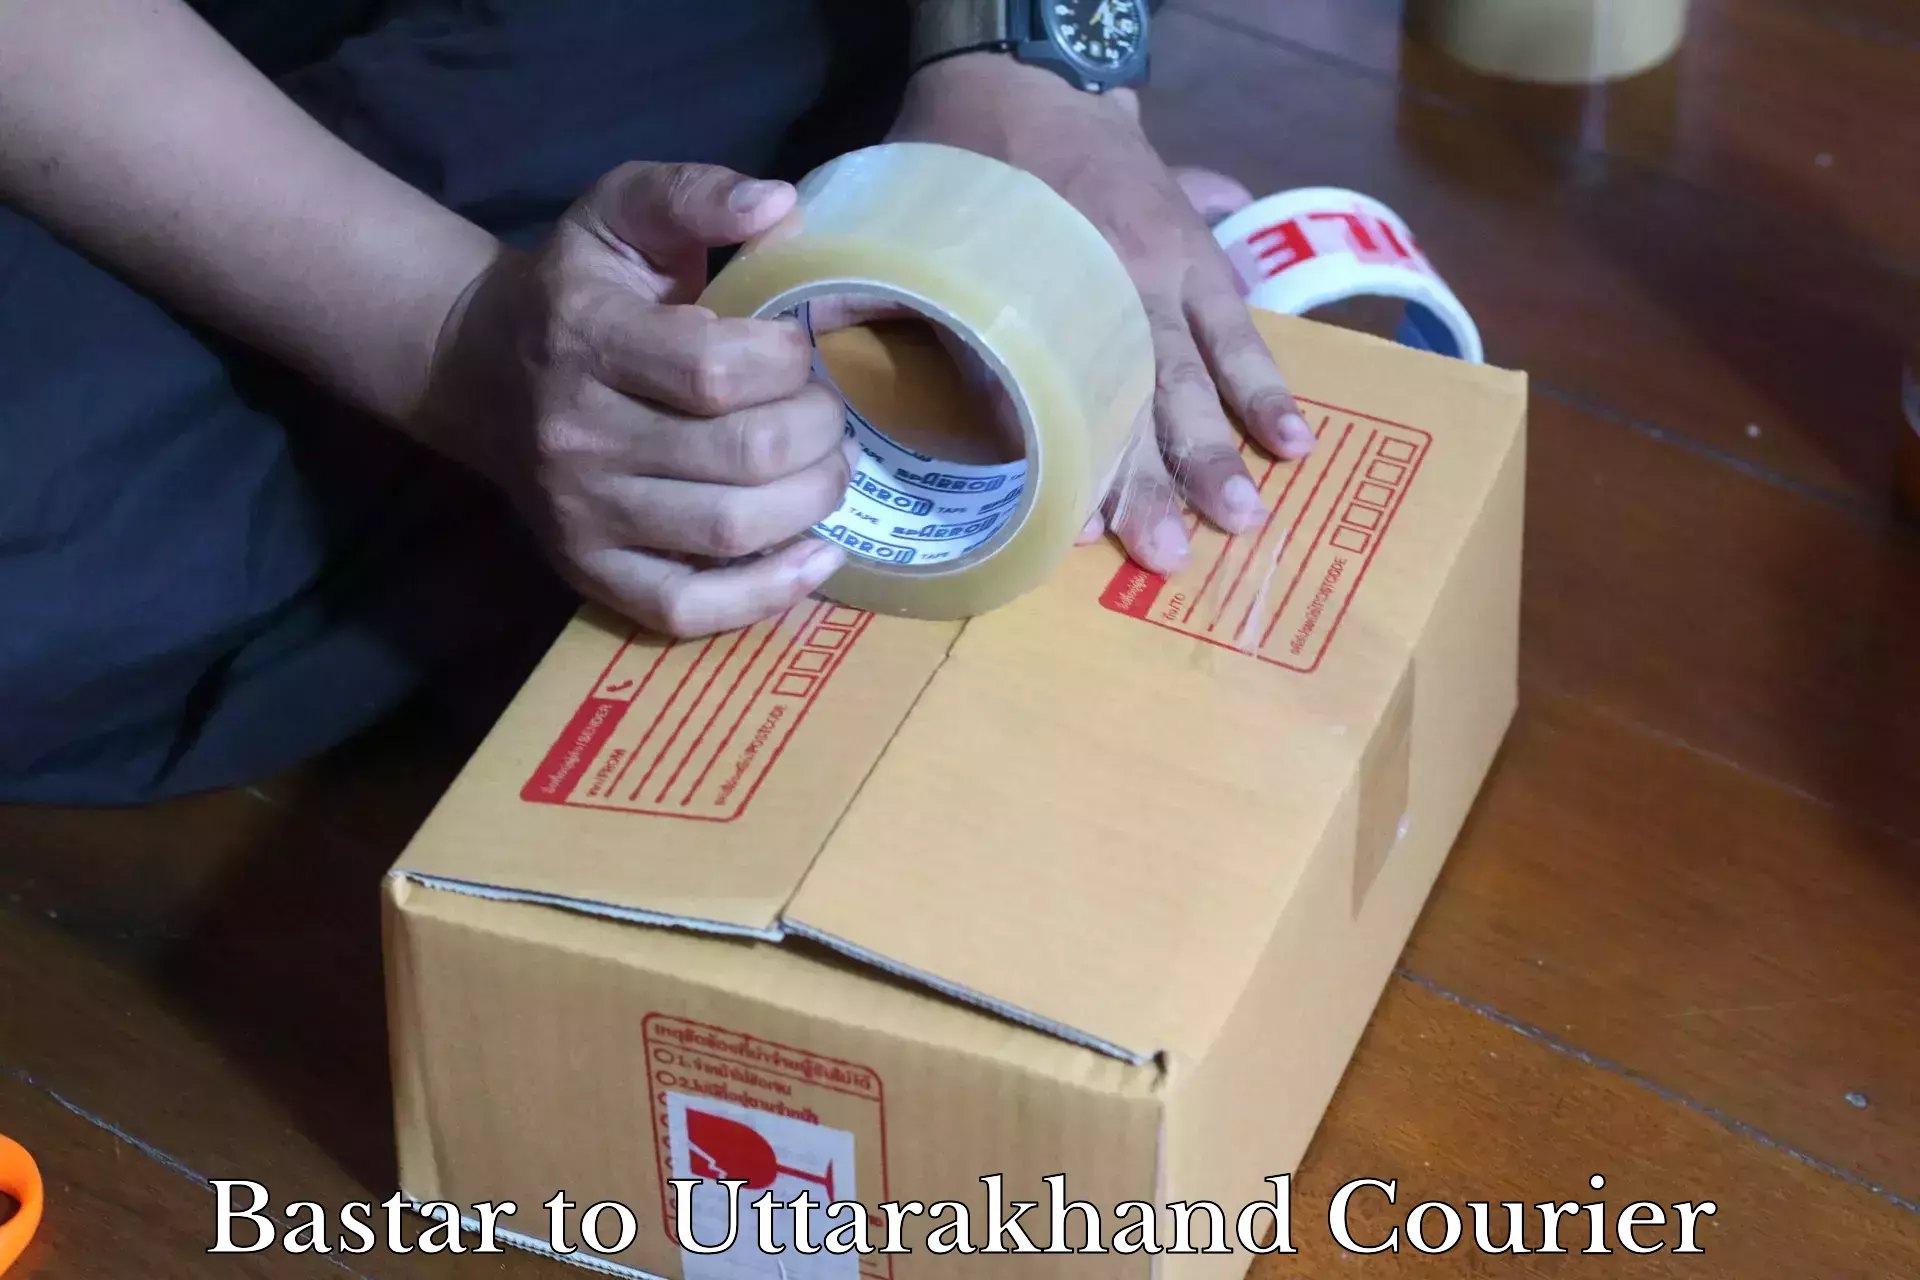 Professional courier handling Bastar to Gairsain